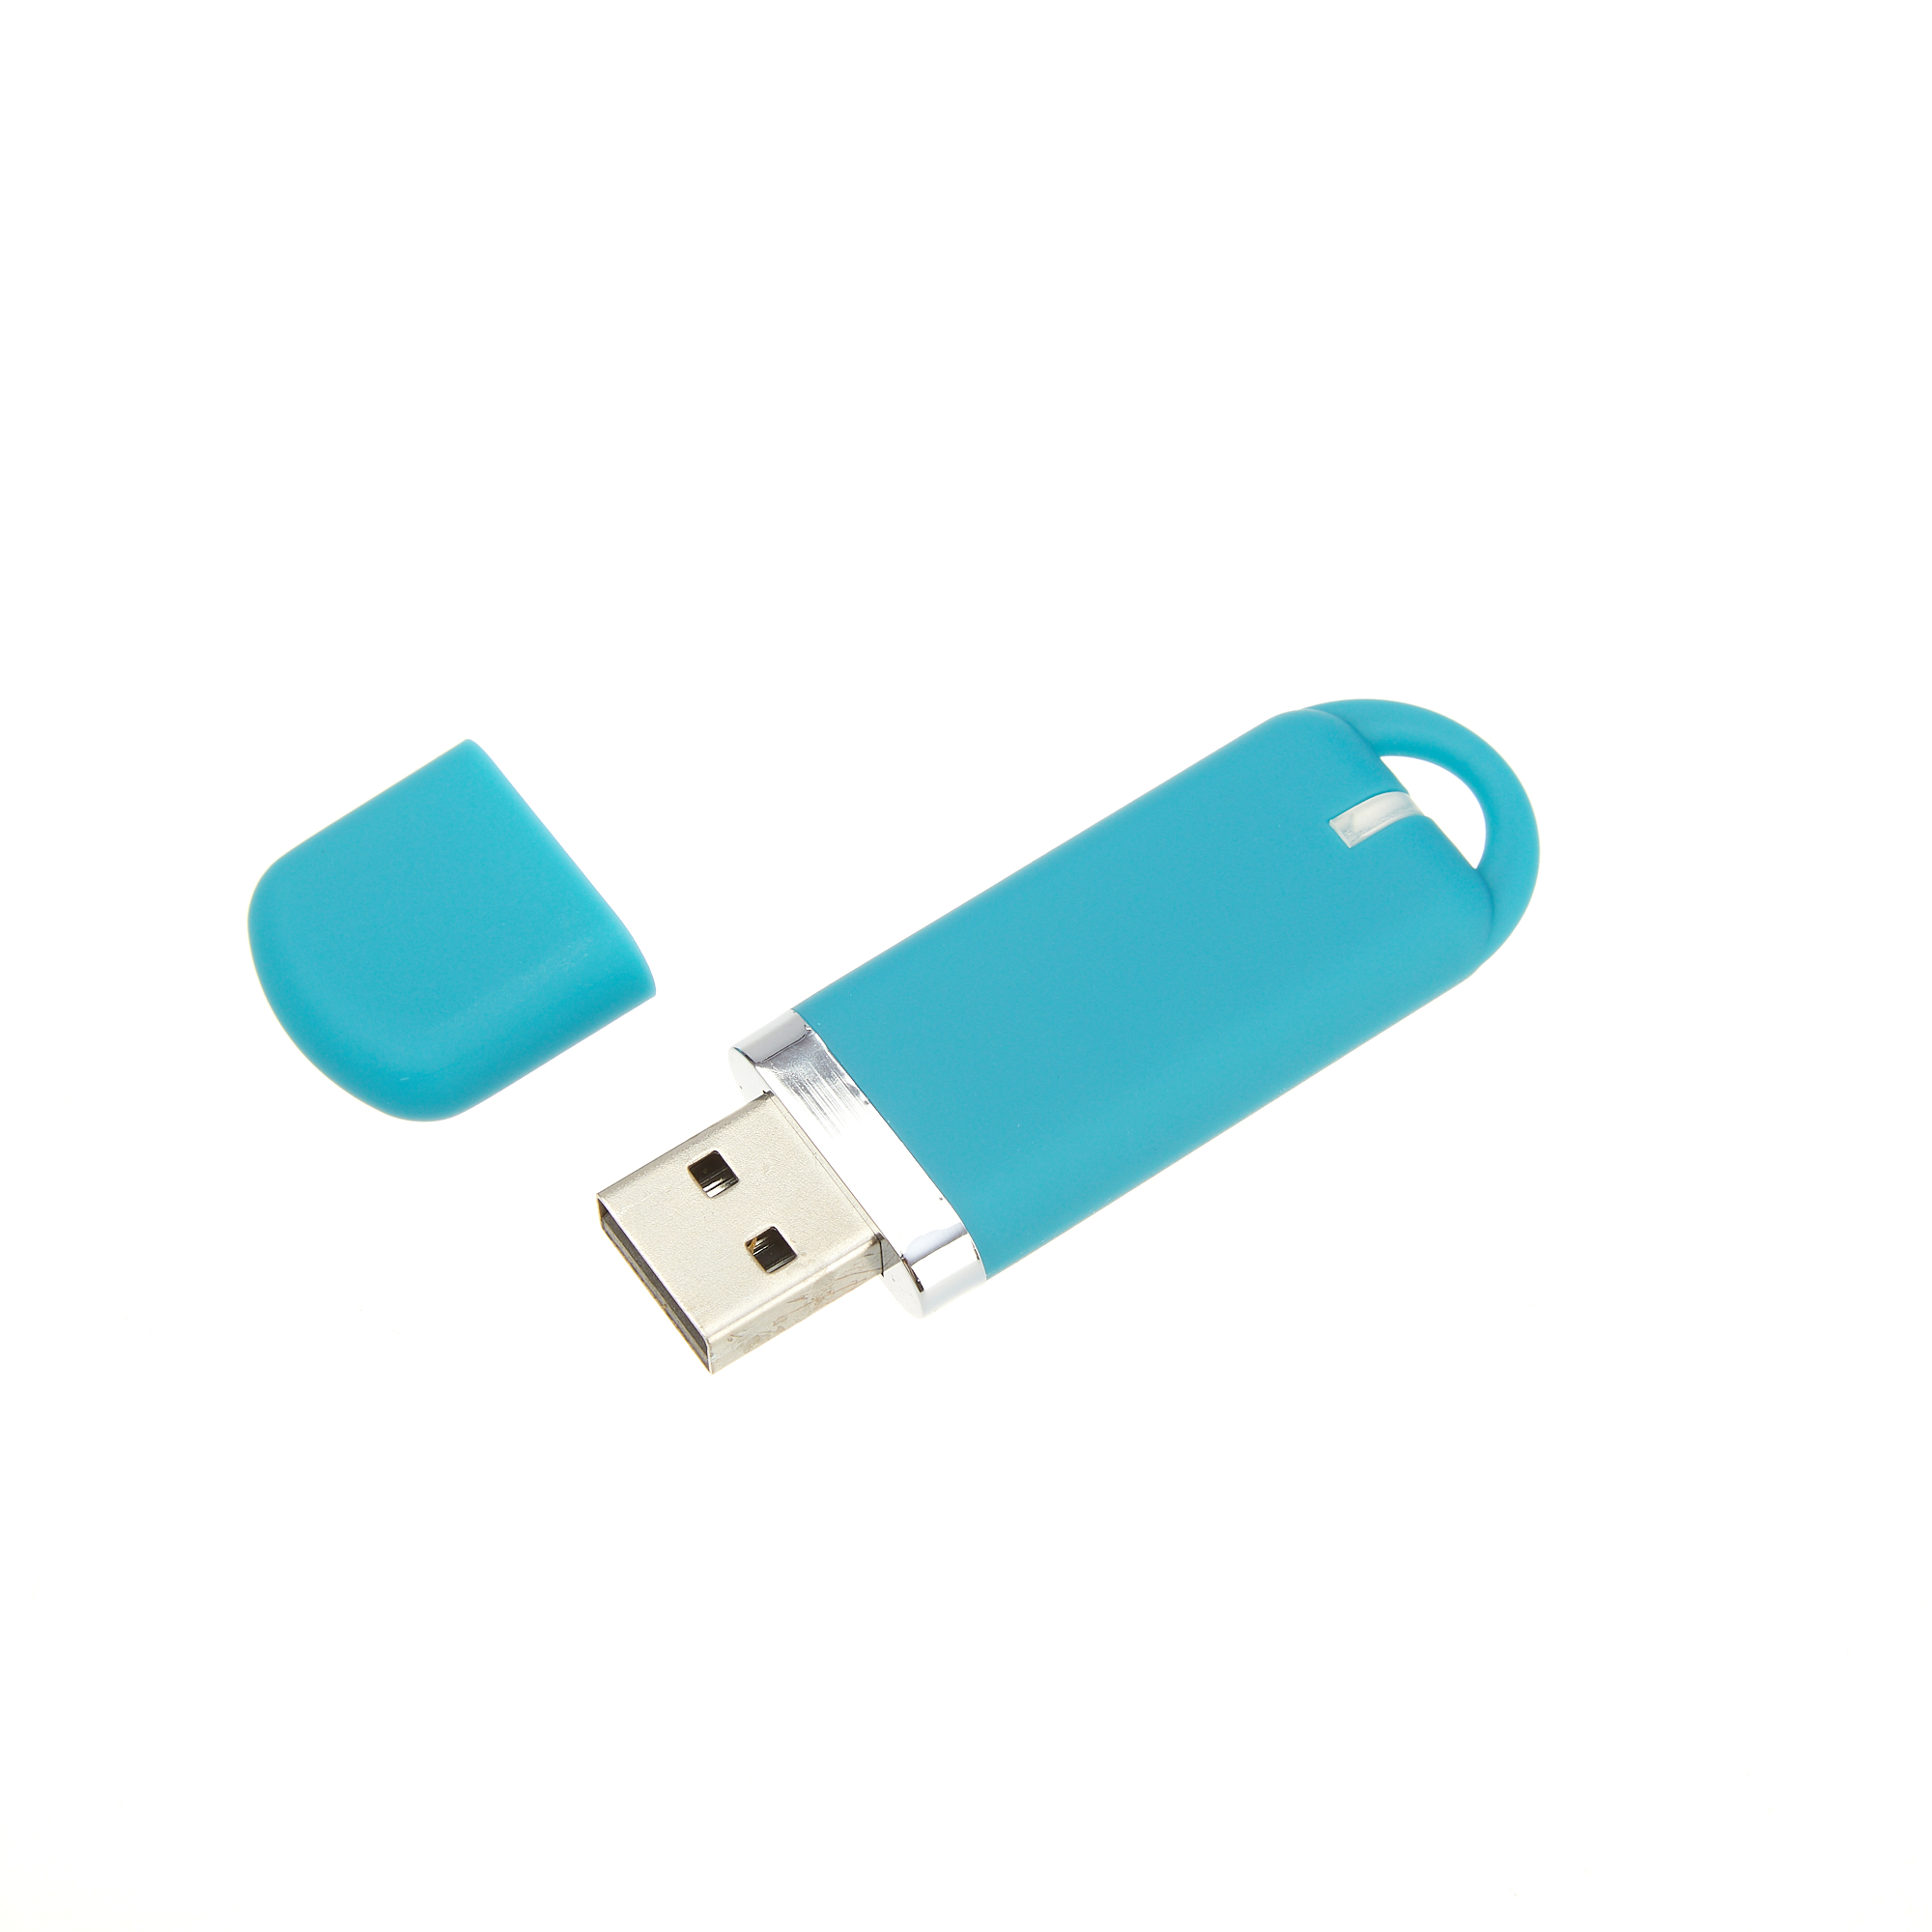 USB-флешка модель 187 Soft Touch USB 3.0, объем памяти 512 MB, цвет Turquoise